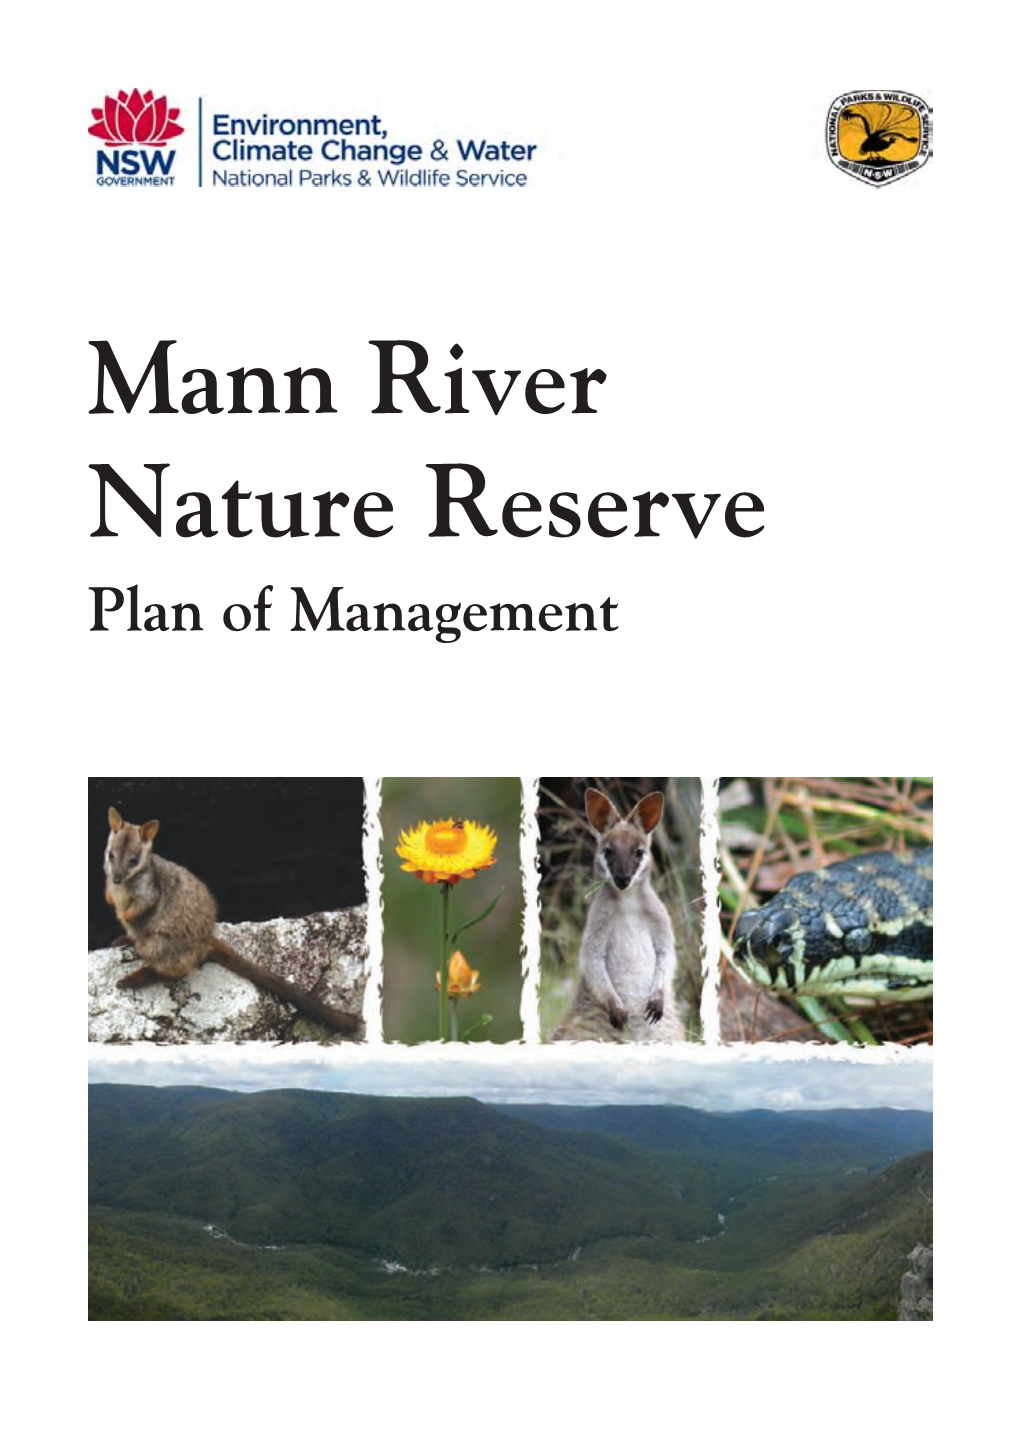 Mann River Nature Reserve Plan of Management